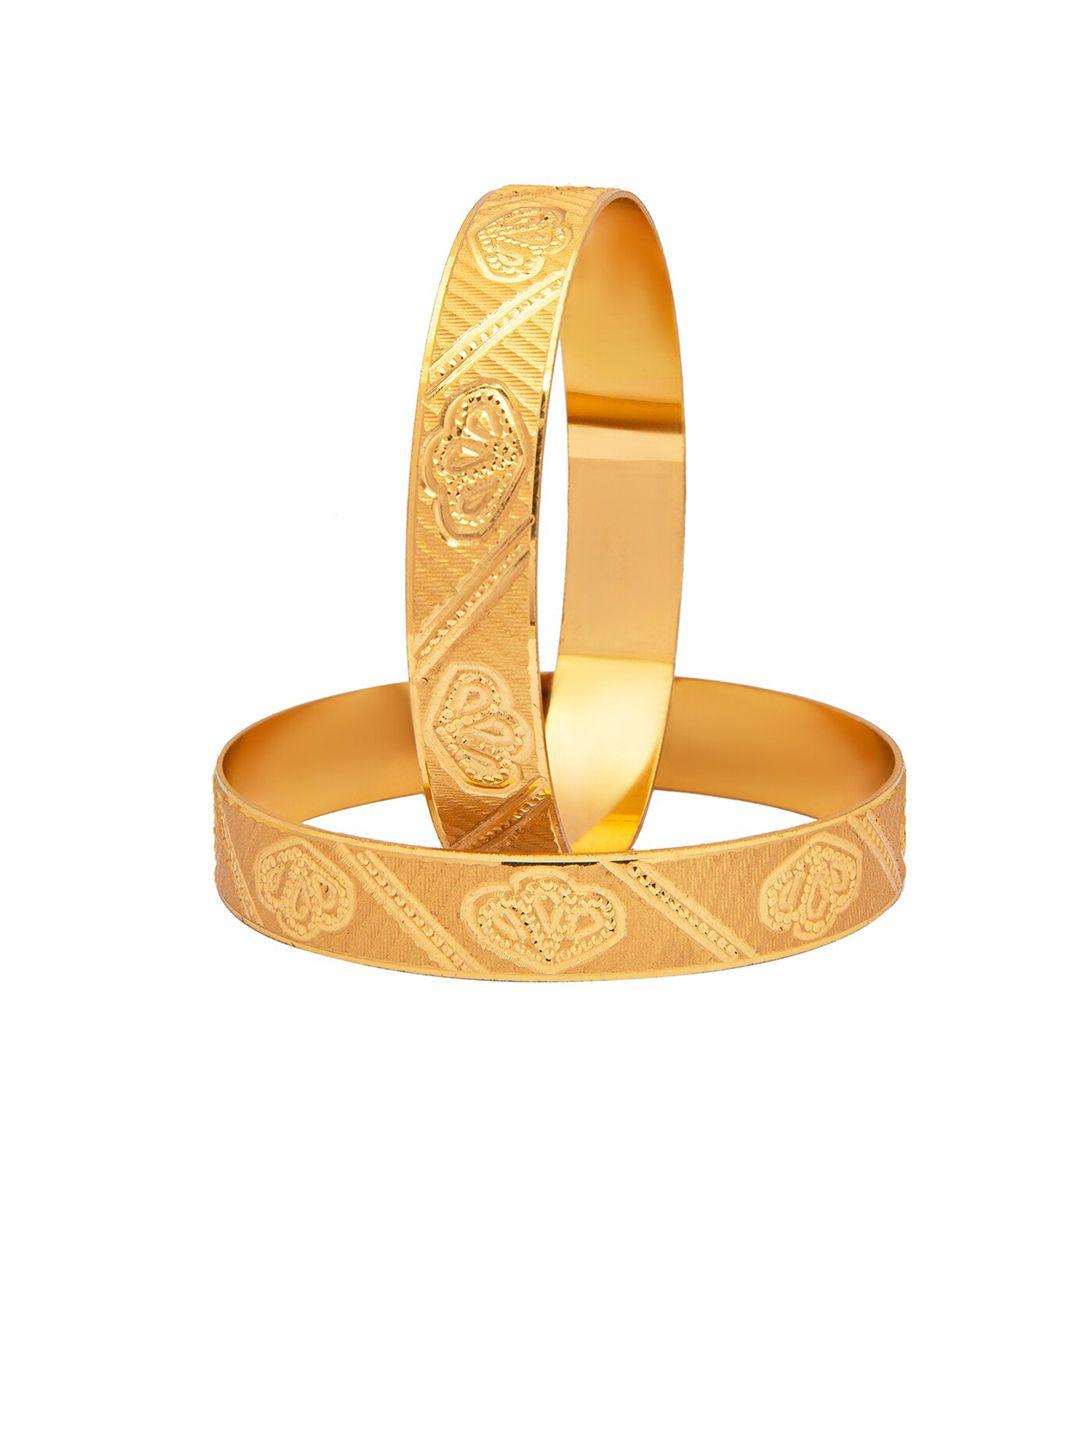 shining-jewel---by-shivansh-set-of-2-gold-plated-&-textured-bangles